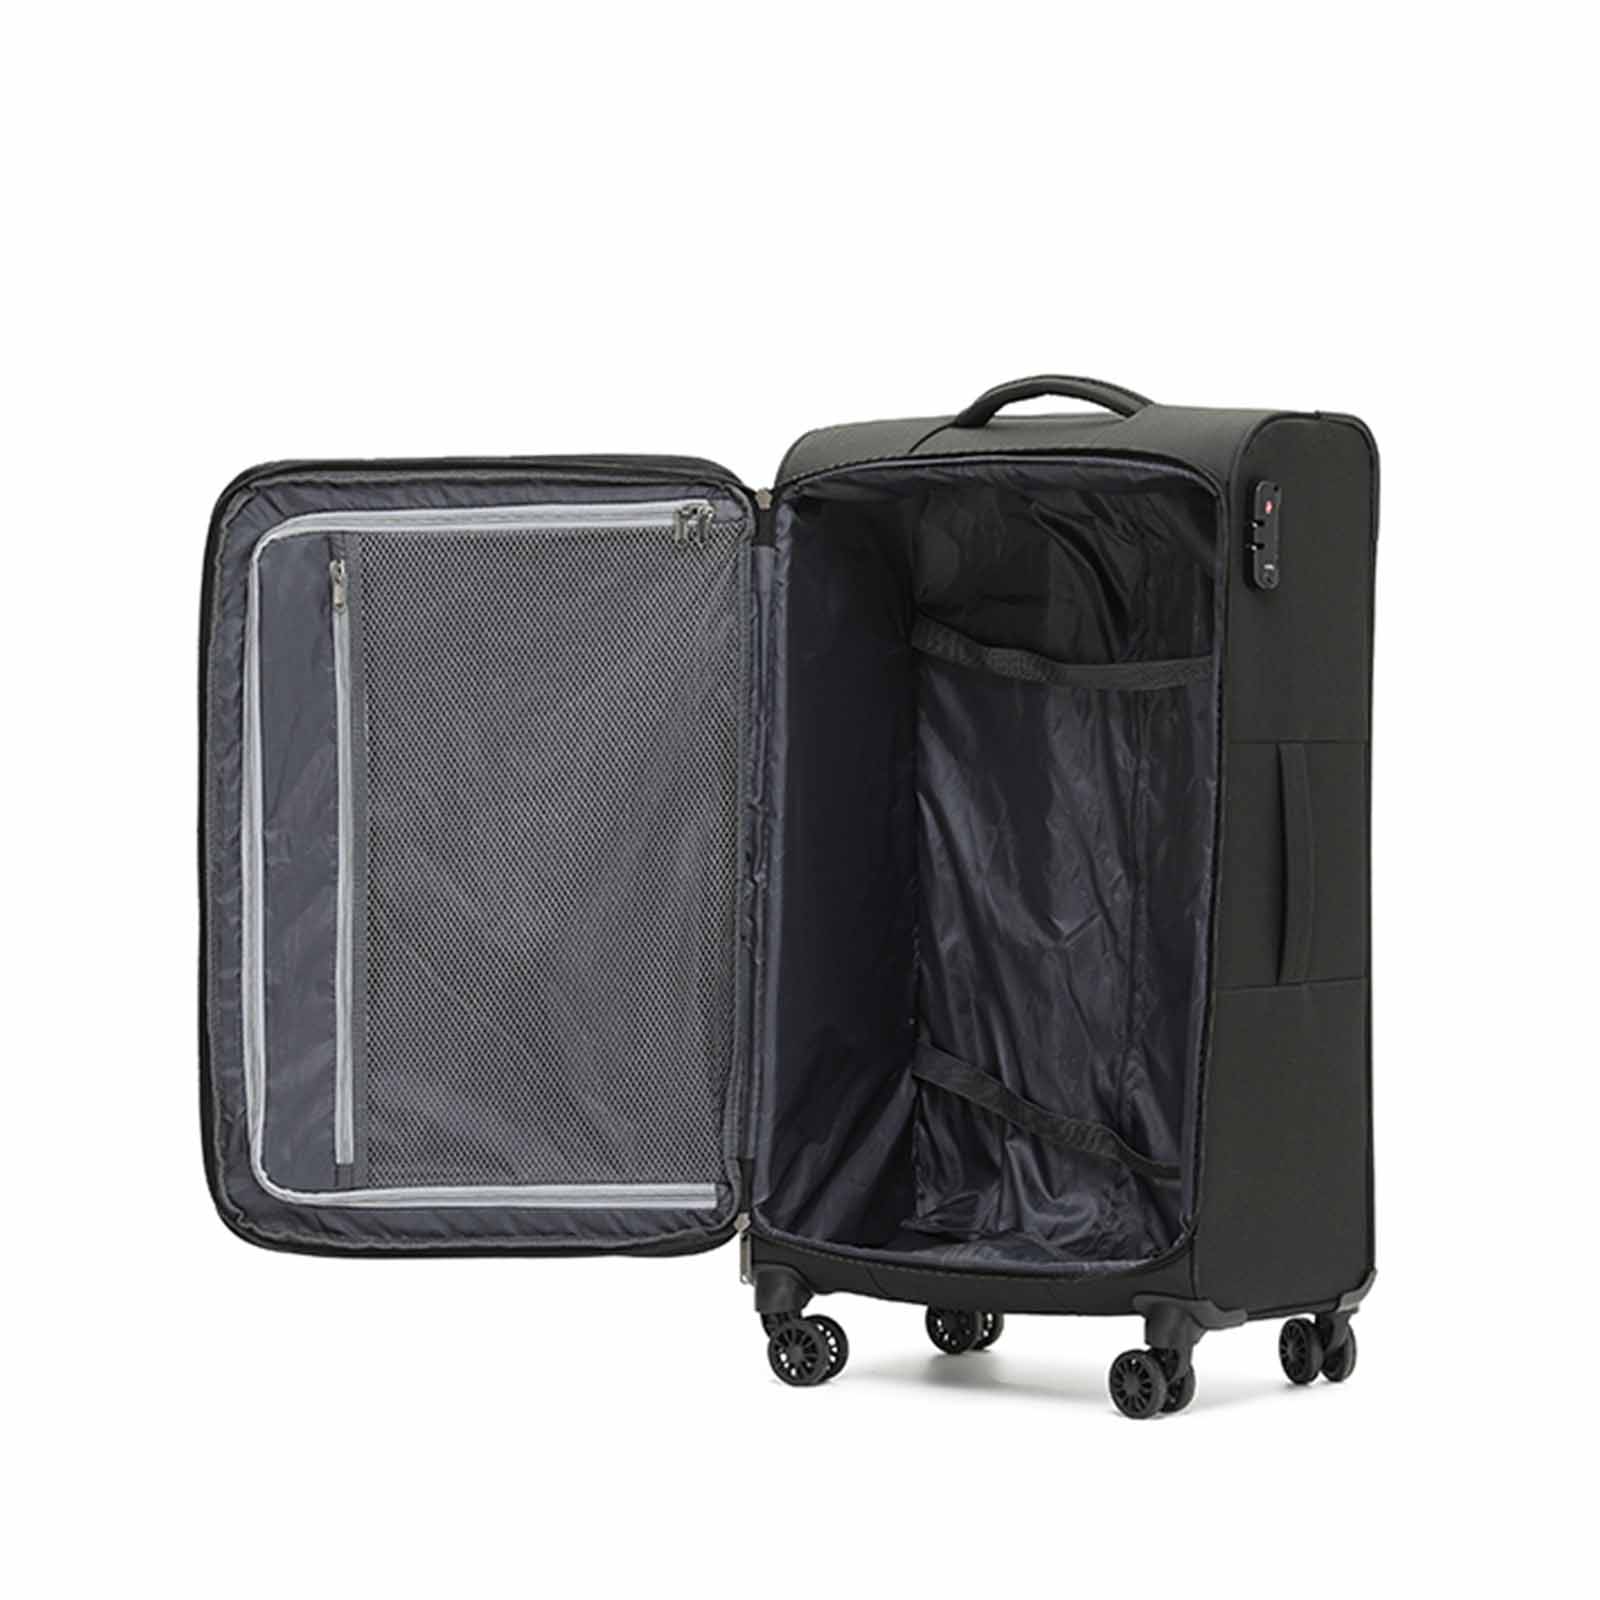 Tosca-Aviator-4-Wheel-Large-Suitcase-Black-Open